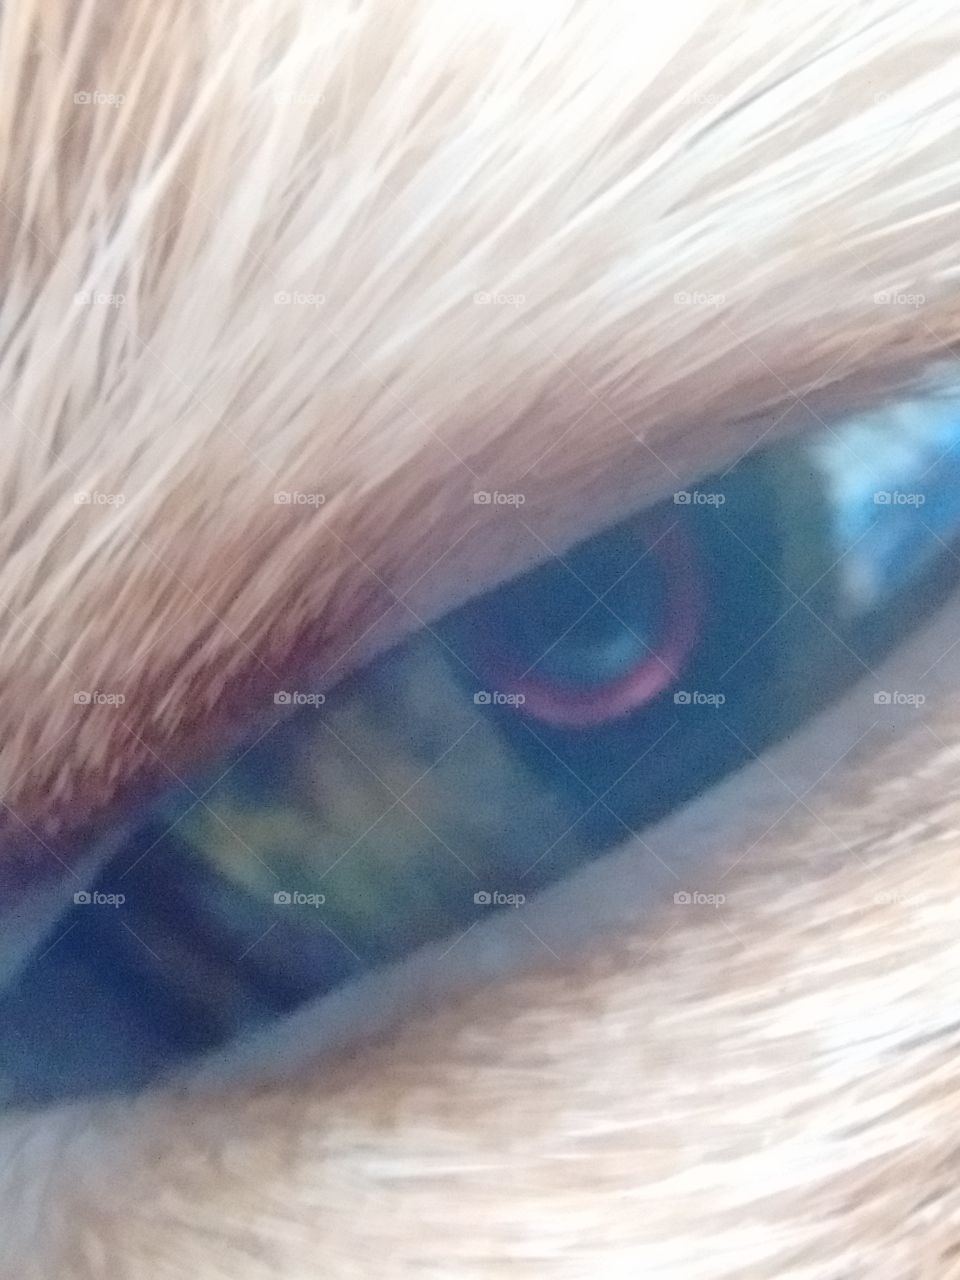 axl's eye reflecting camera lens